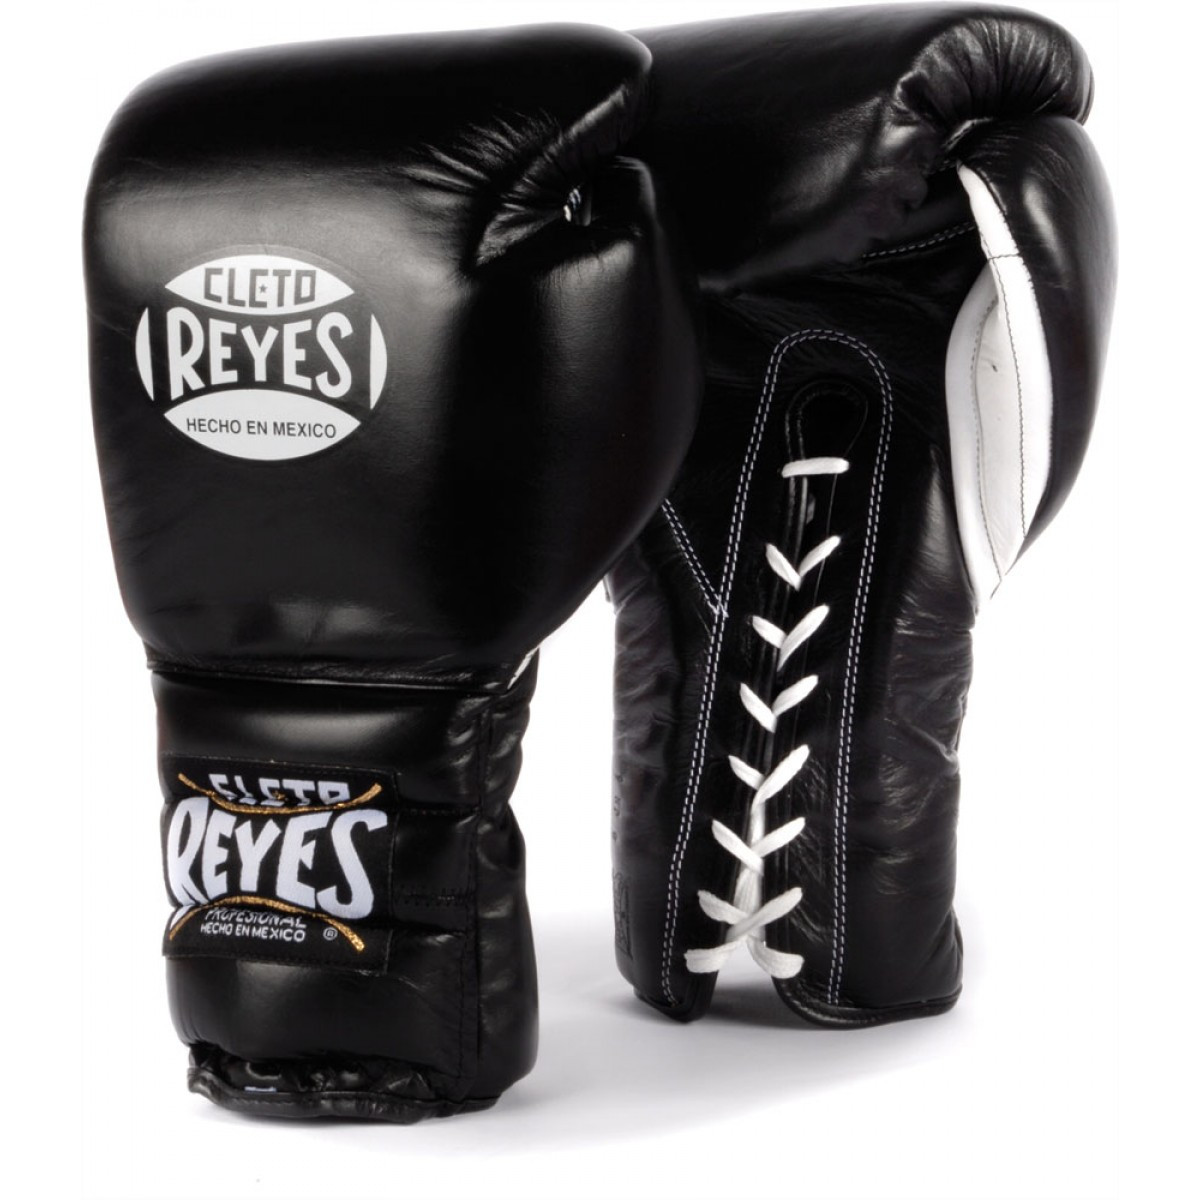 Cleto Reyes Lace Up Training Gloves Black Color - FIGHT SHOP®